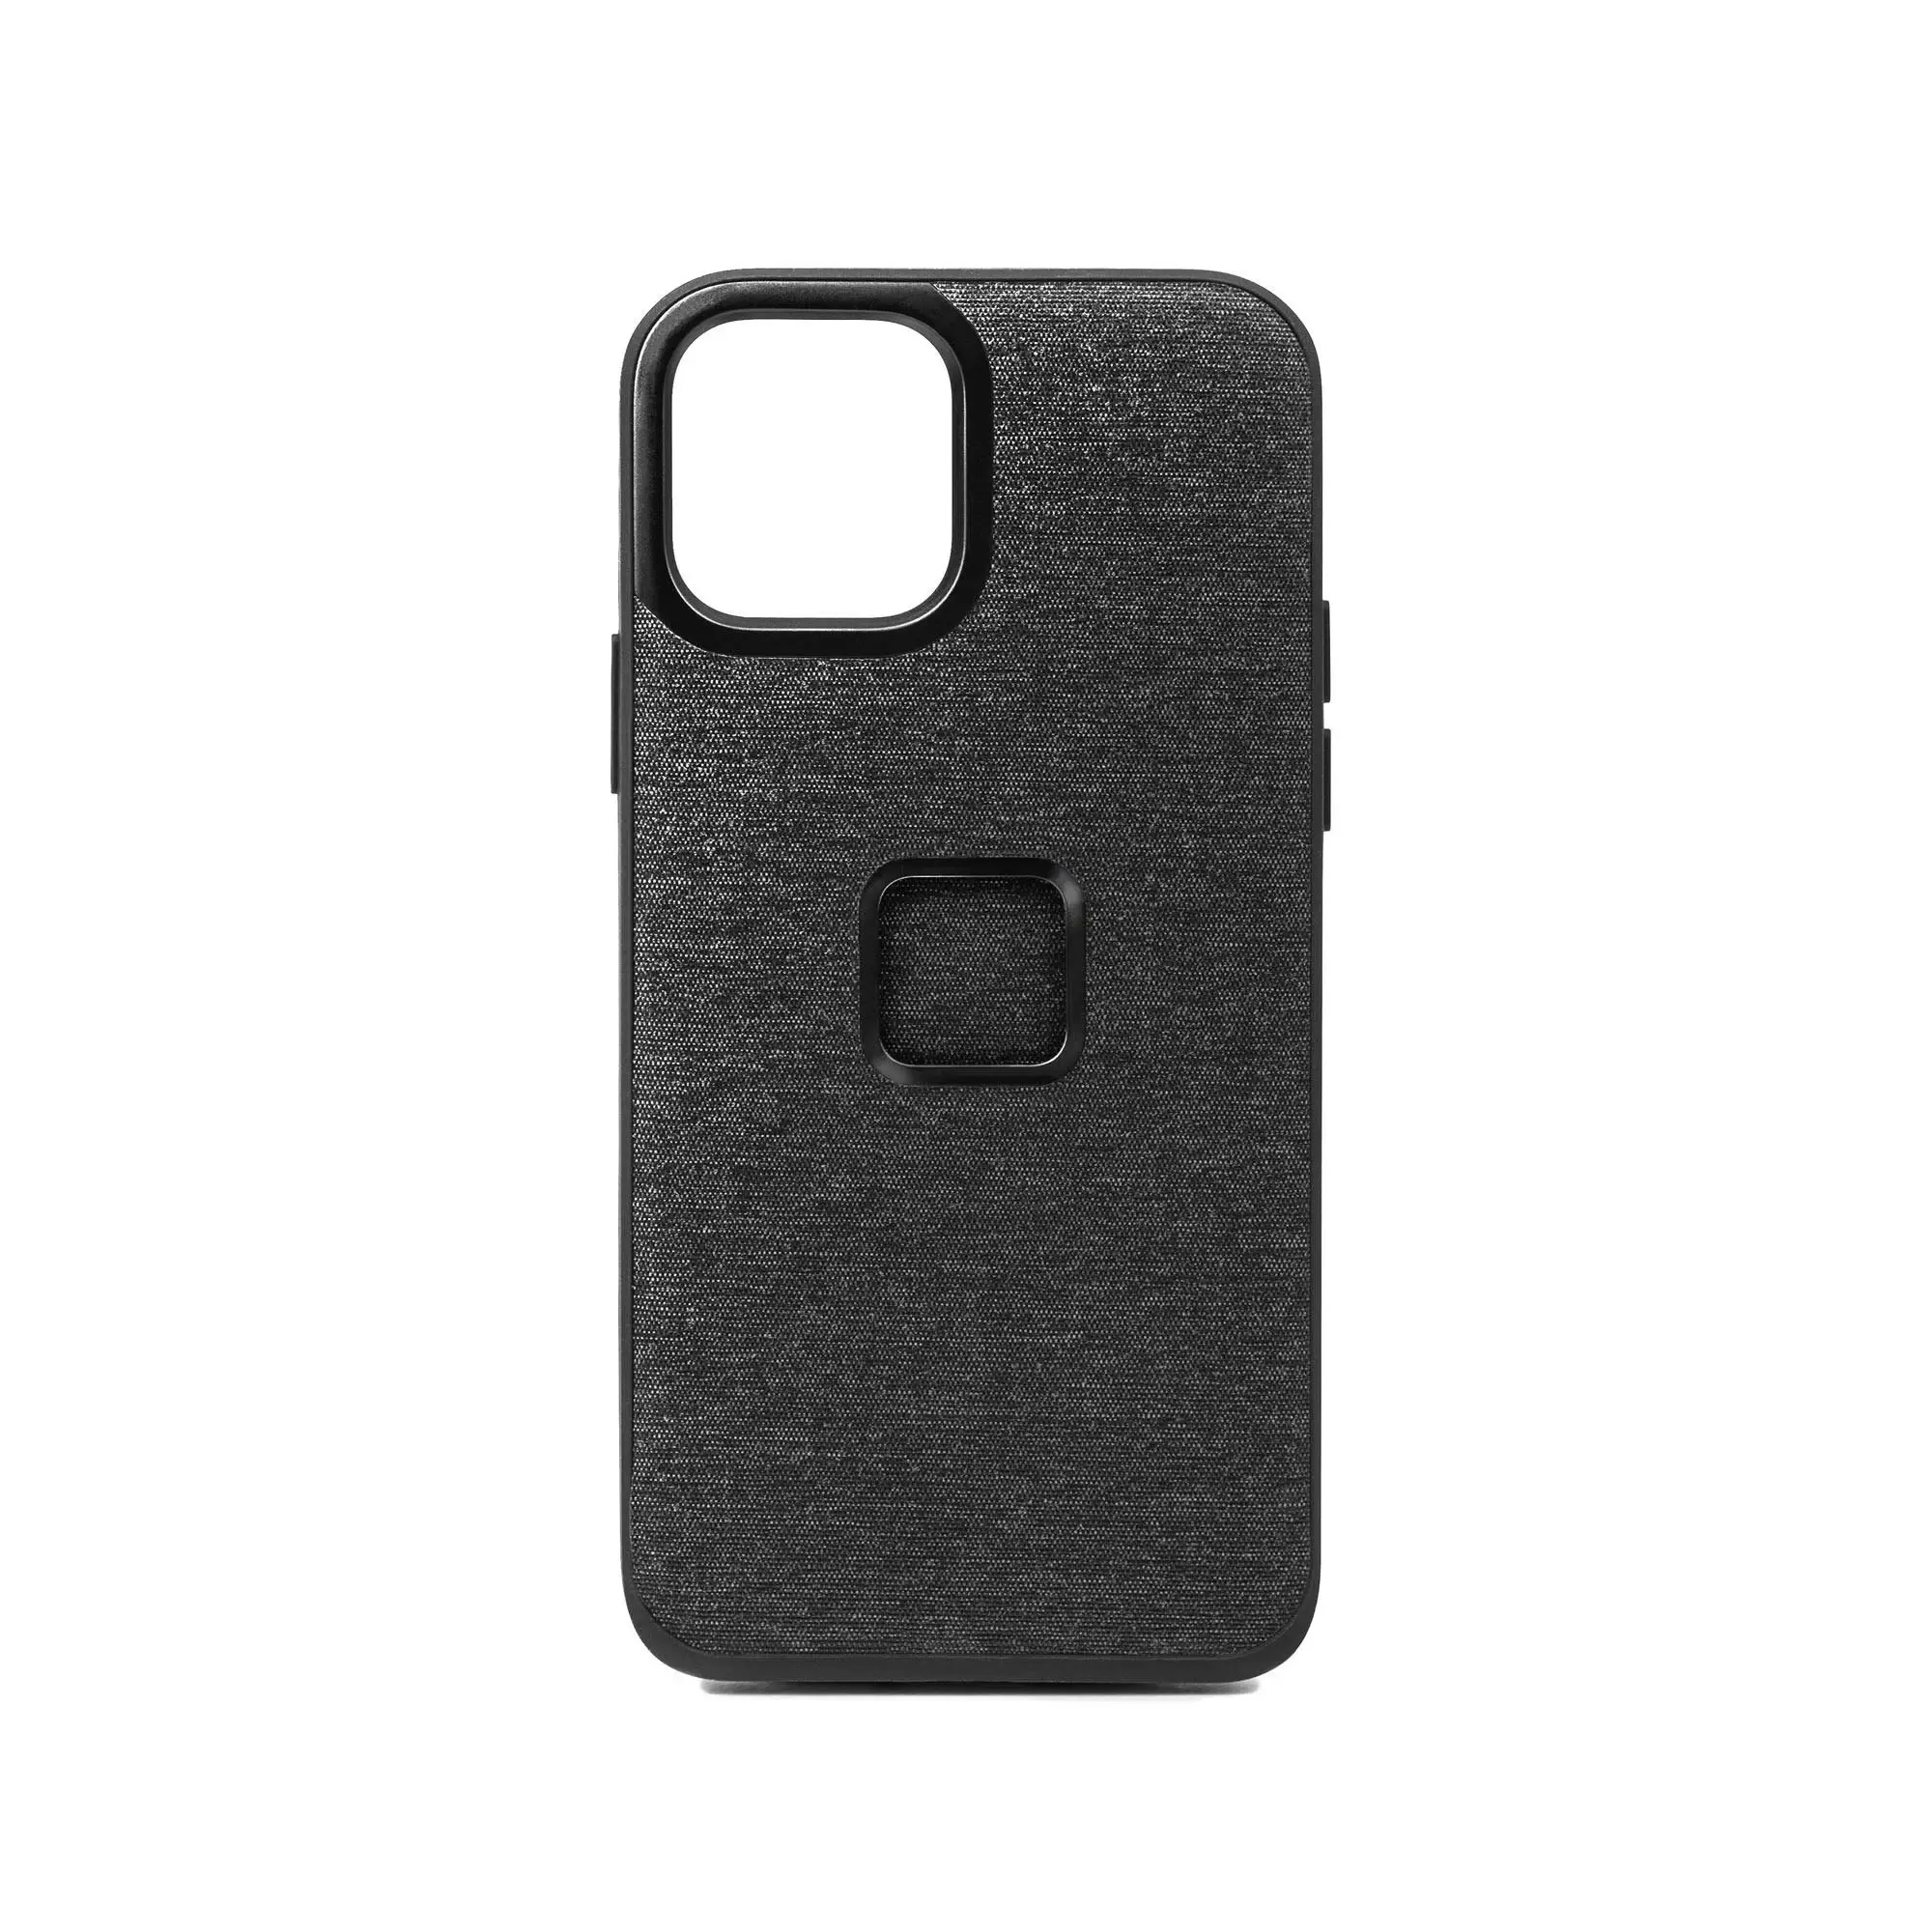 Peak Design - Mobile Everyday Fabric Case iPhone 11 Pro - Charcoal